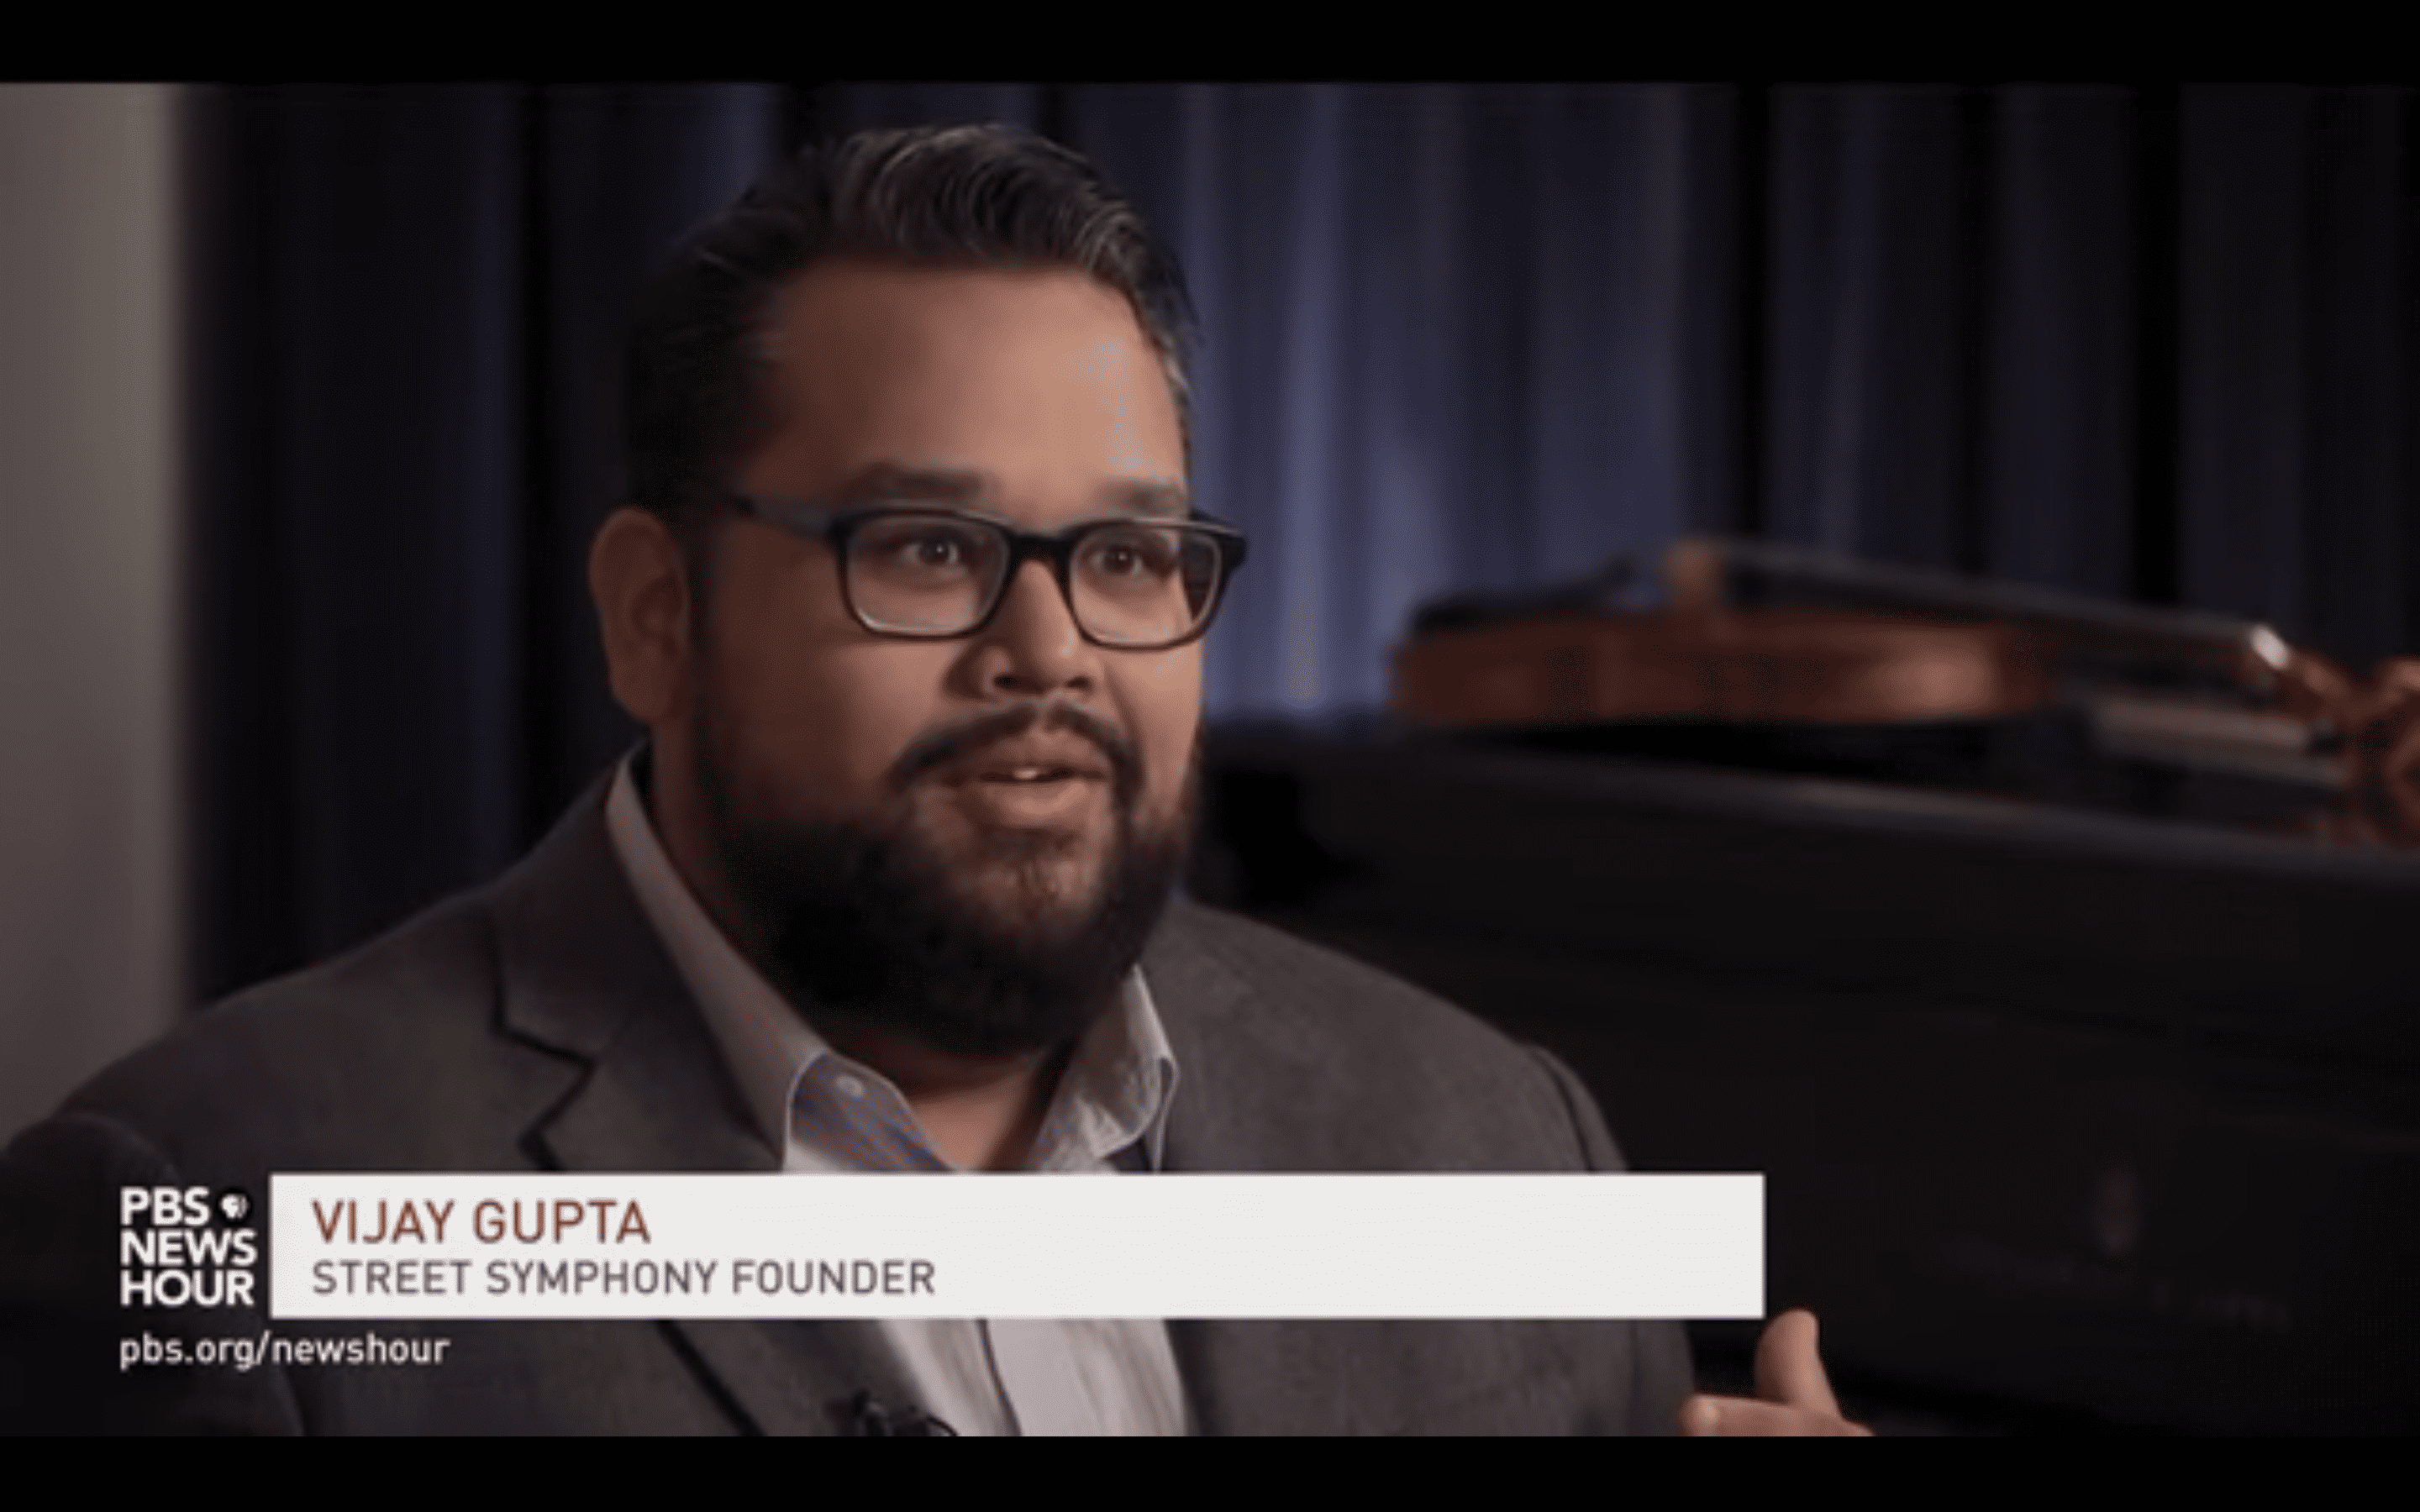 Vijay Gupta, a brown-skinned man, giving an interview on PBS.